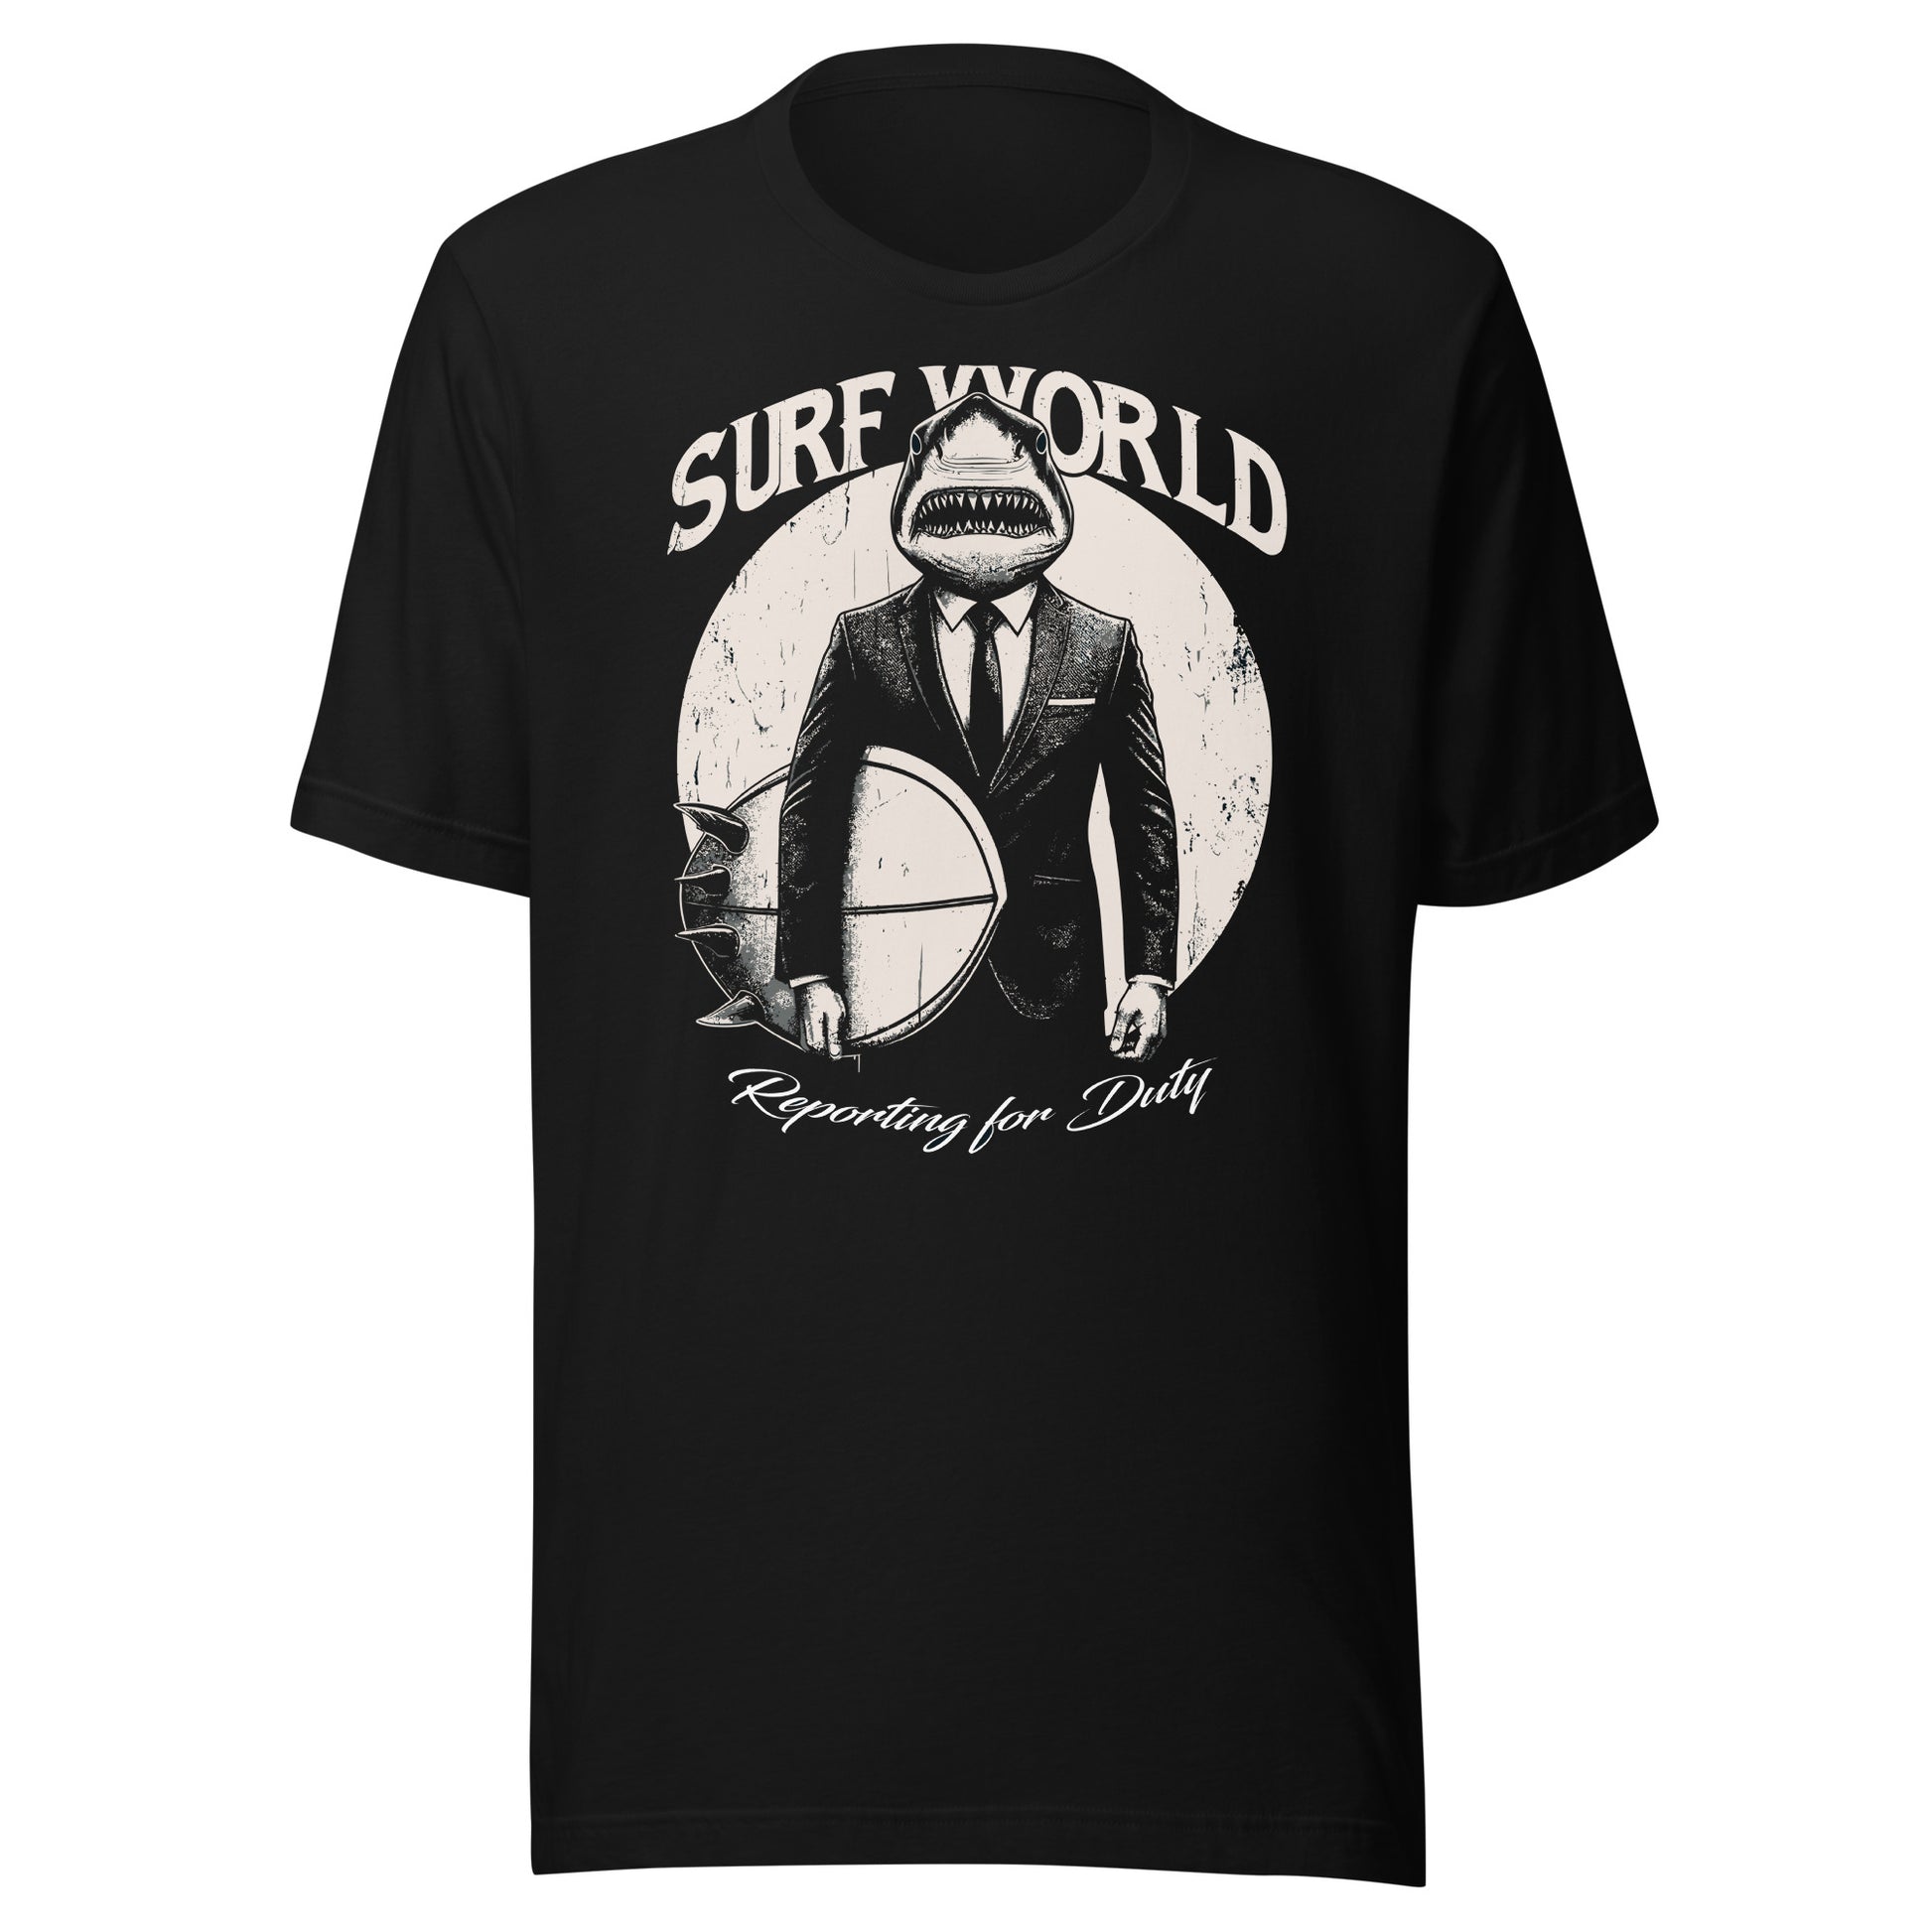 Surf World Shark Boss Reporting for Duty Tee Shirt Mens T Shirt Black